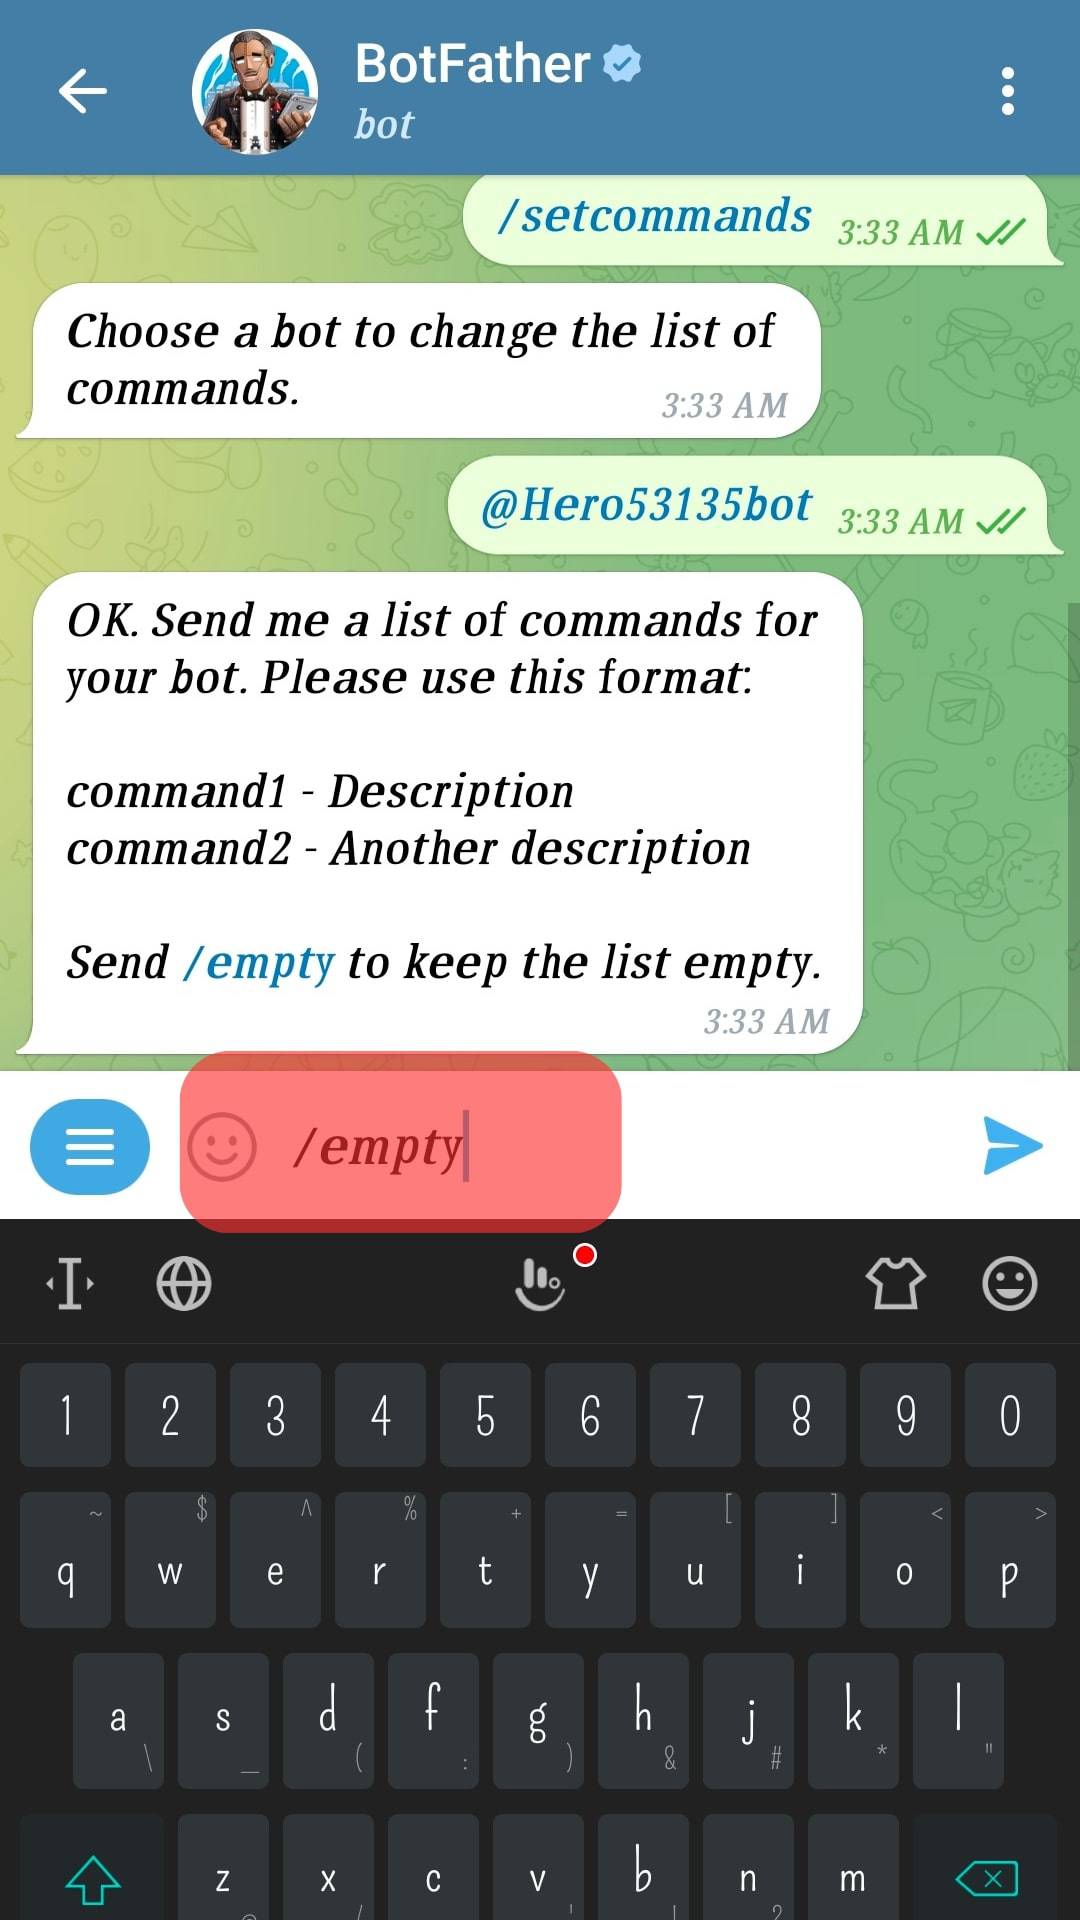 Send The Command Description